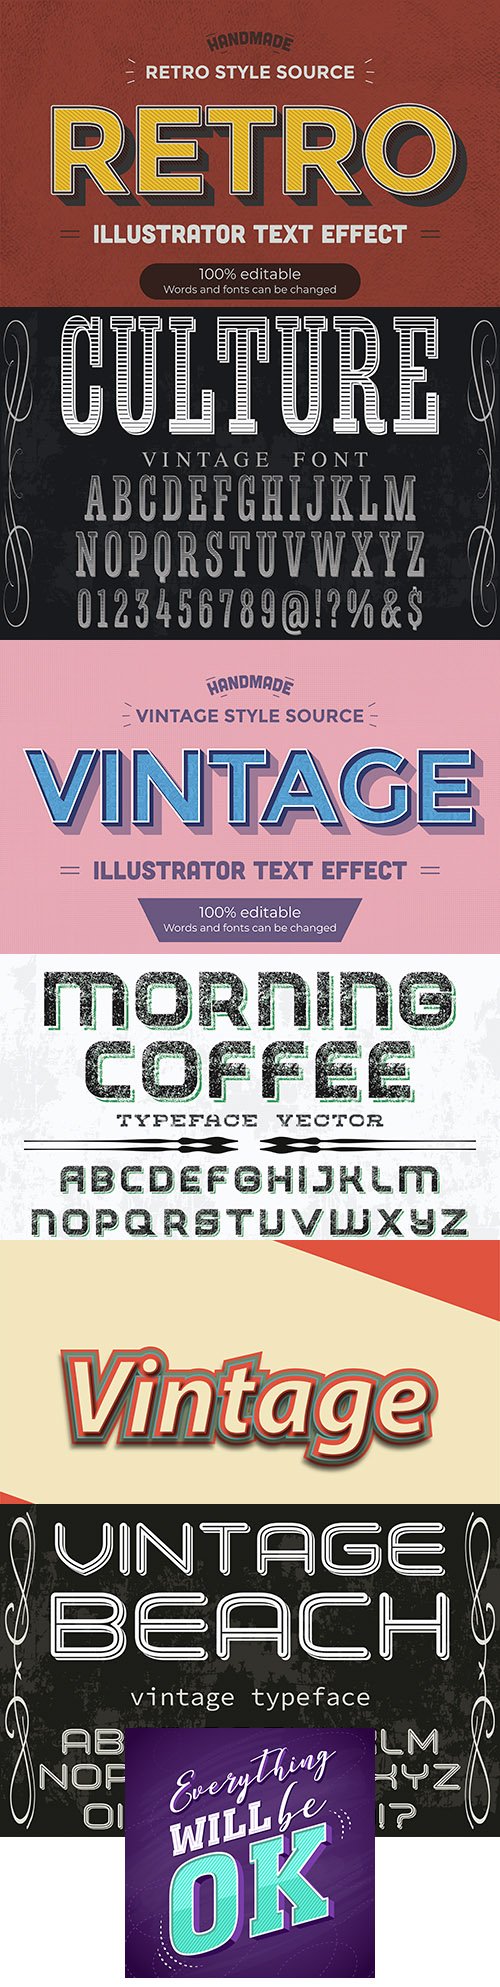 Vintage font editable effect collection illustration